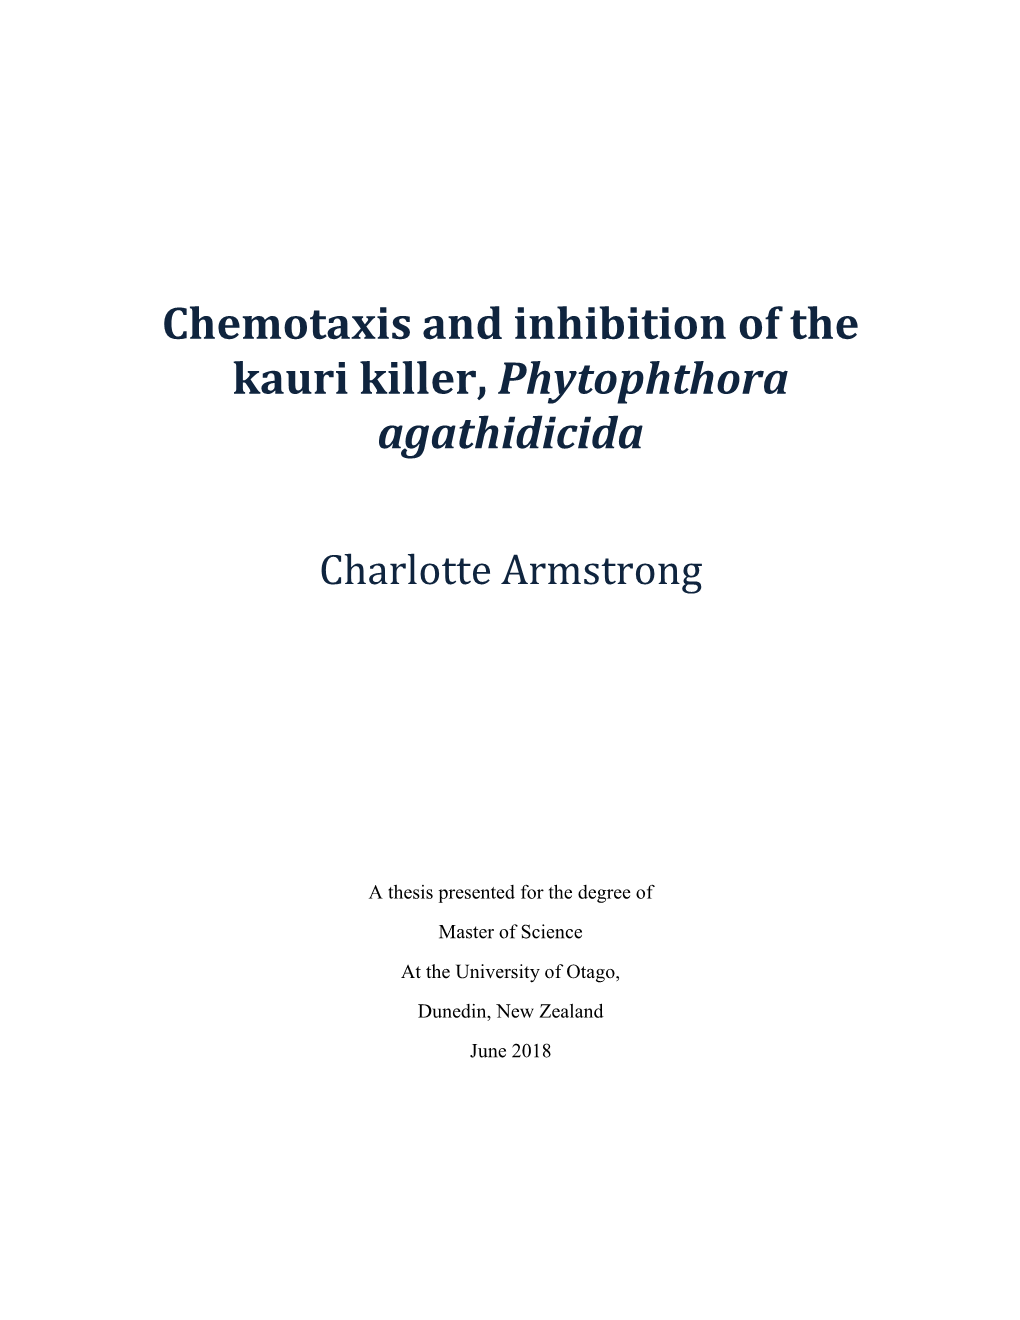 Chemotaxis and Inhibition of the Kauri Killer, Phytophthora Agathidicida